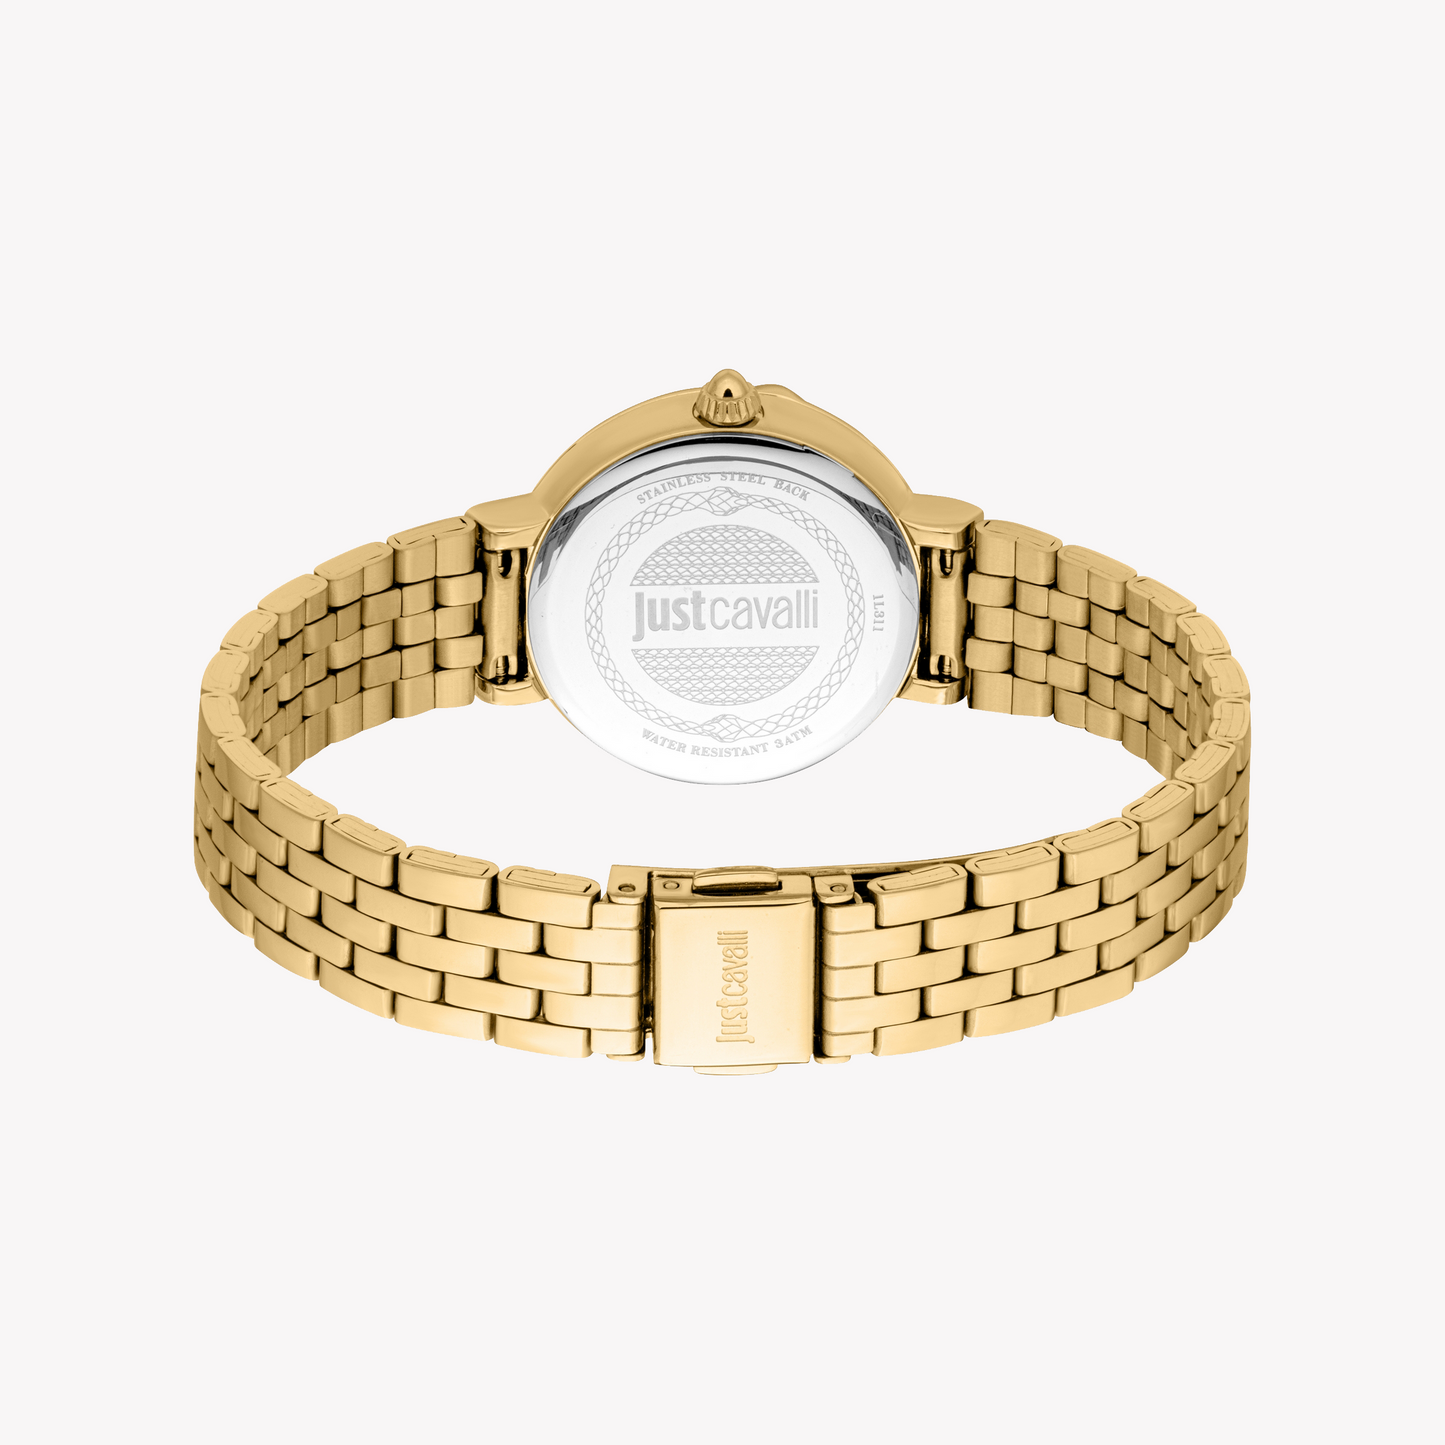 Just Cavalli Gold Alloy Steel Women's Watch